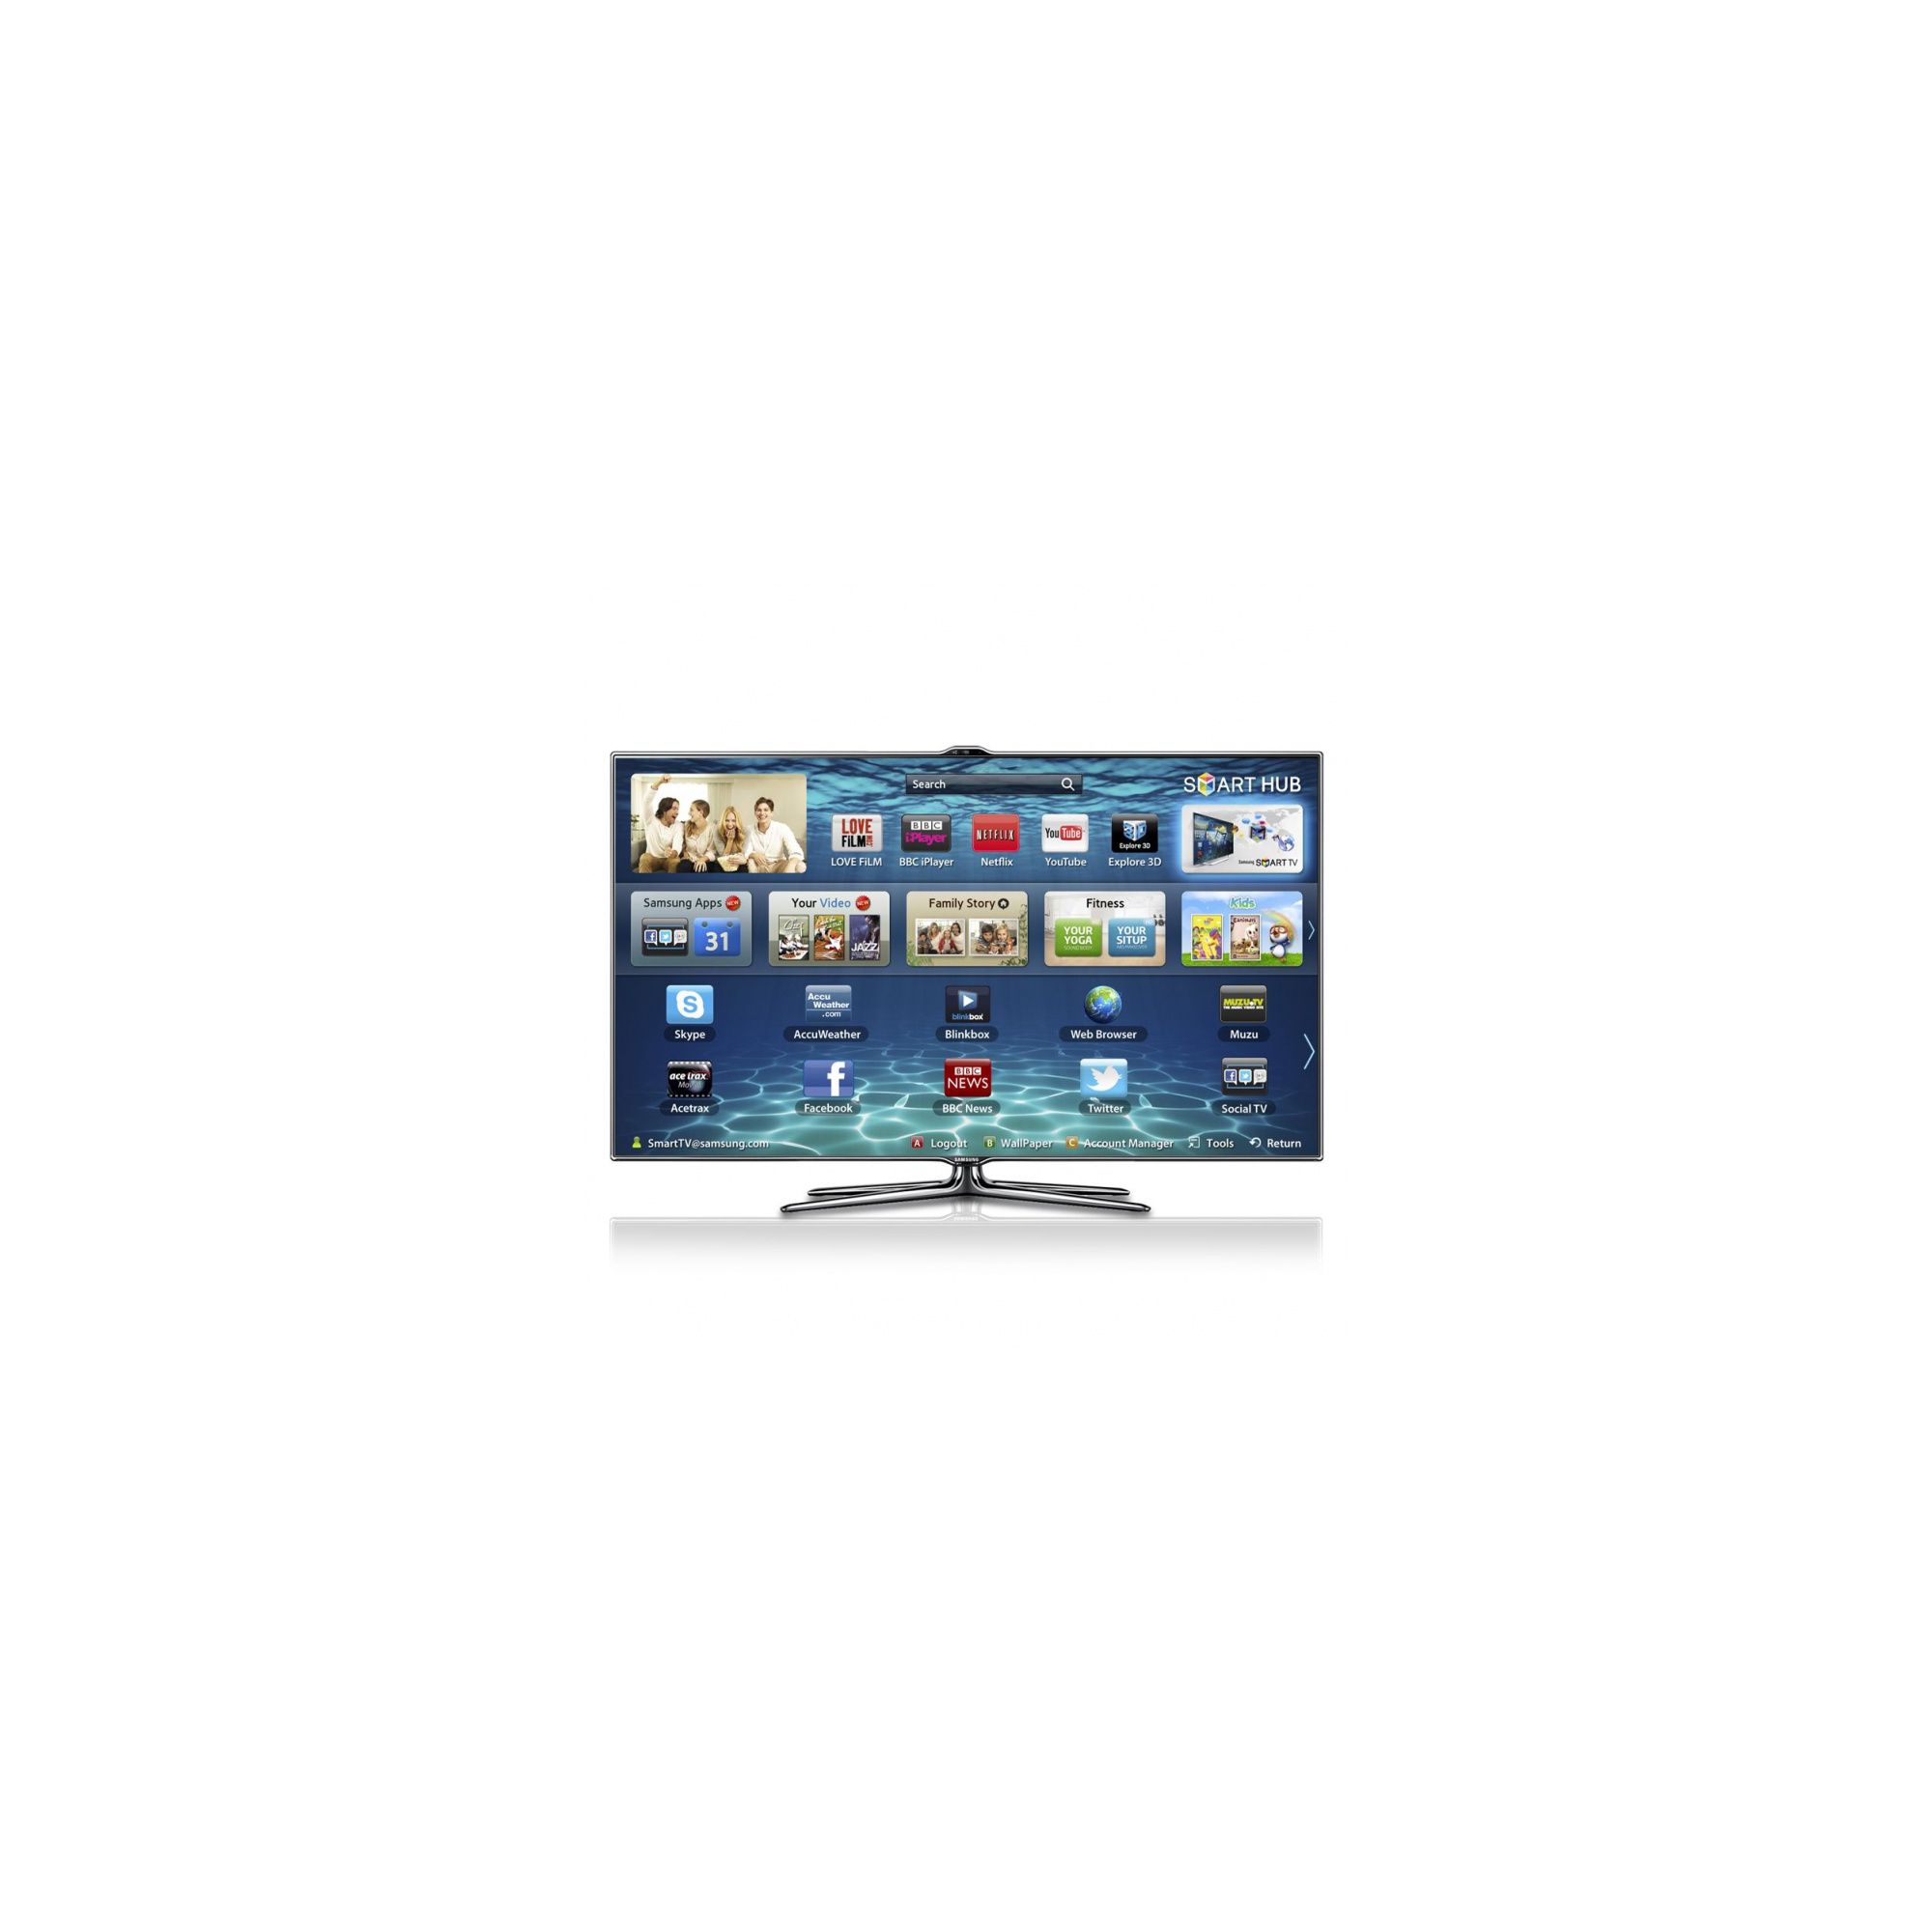 Samsung UE46ES7000 46 -inch LCD 1080 pixels 800 Hz 3D TV